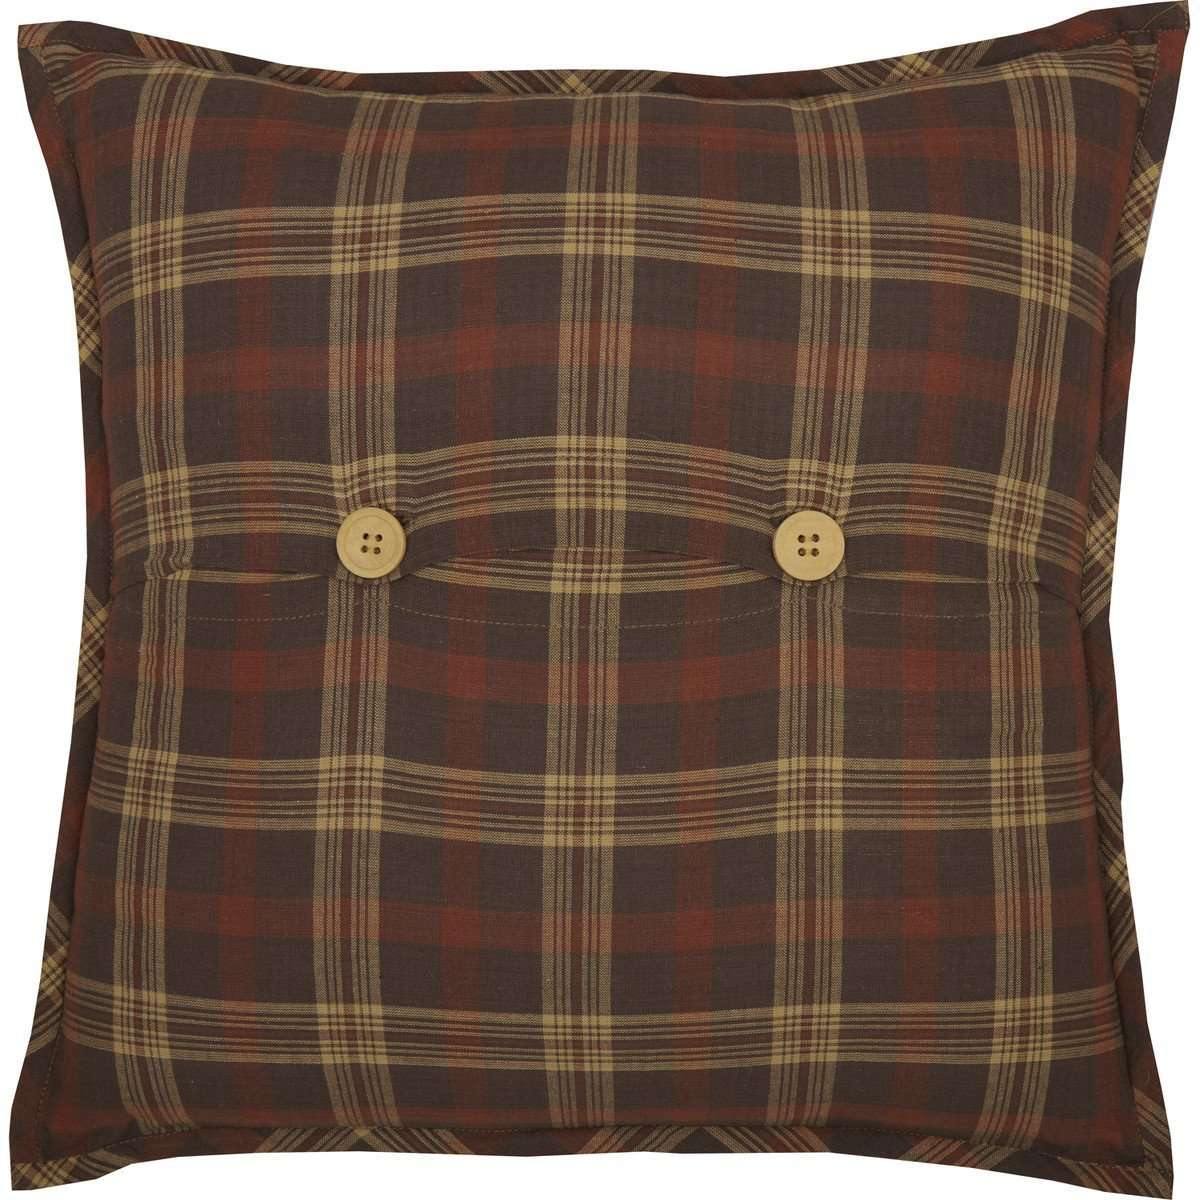 Abilene Harvest Leaf Patch Pillow 18x18 VHC Brands - The Fox Decor